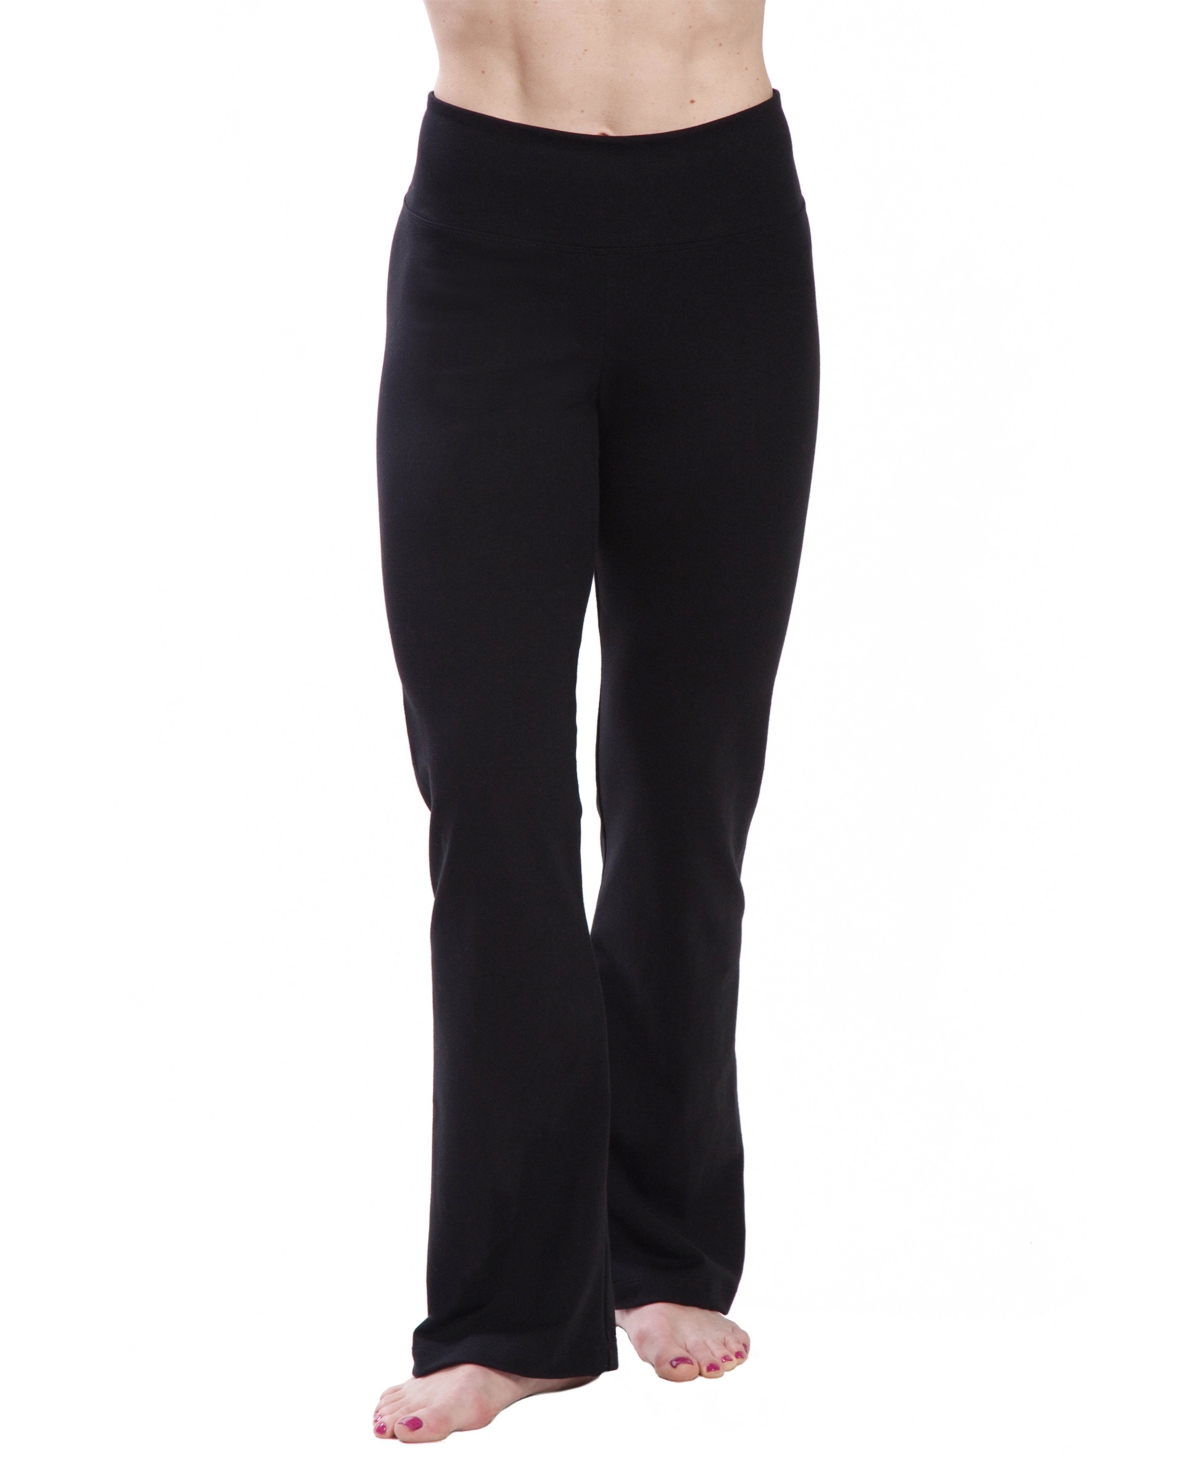 Women's High Waist Comfortable Bootleg Yoga Pants - Black